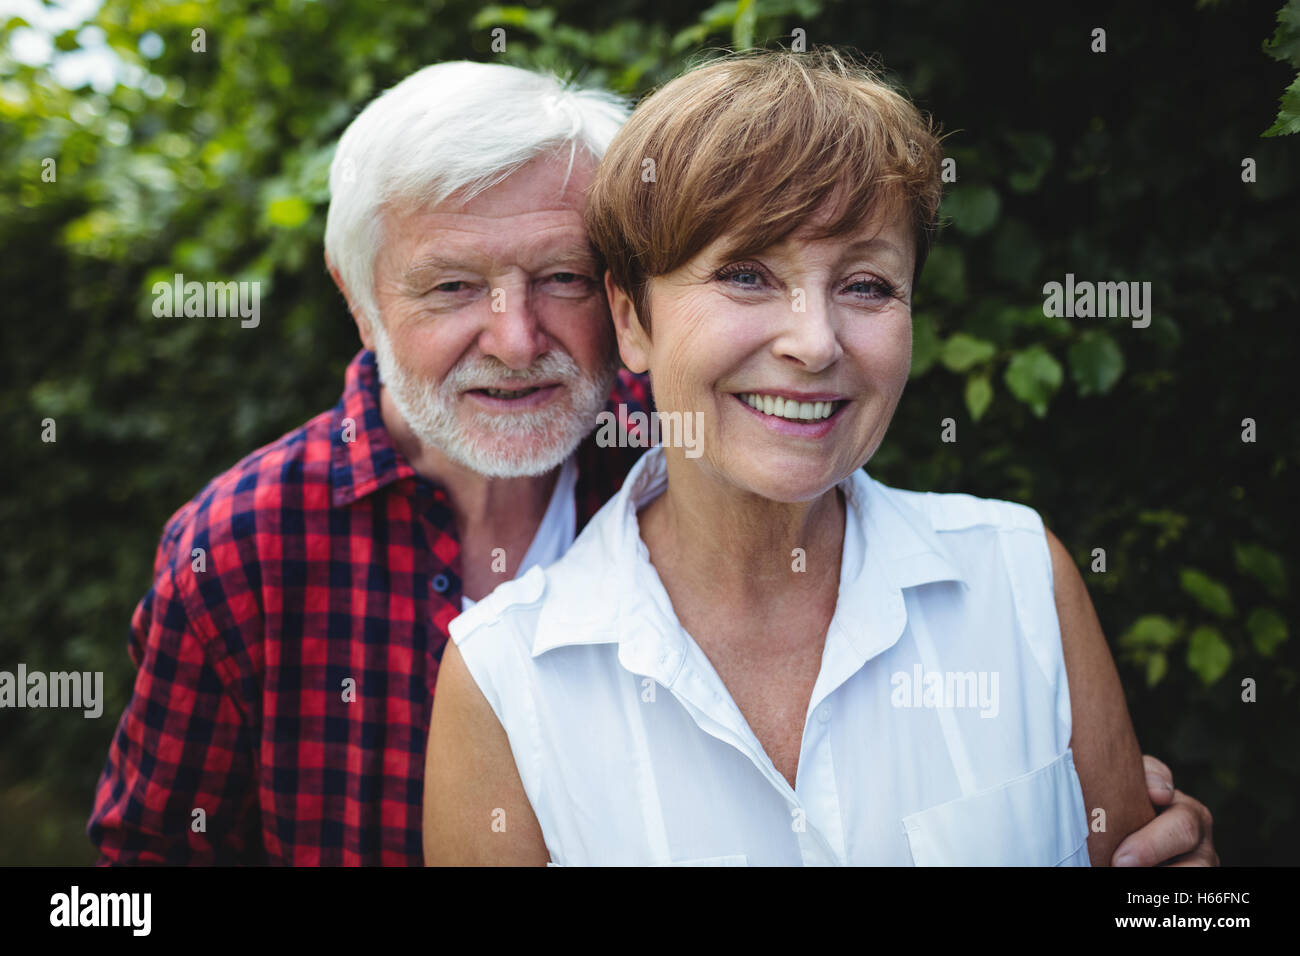 Senior couple smiling outdoors Banque D'Images